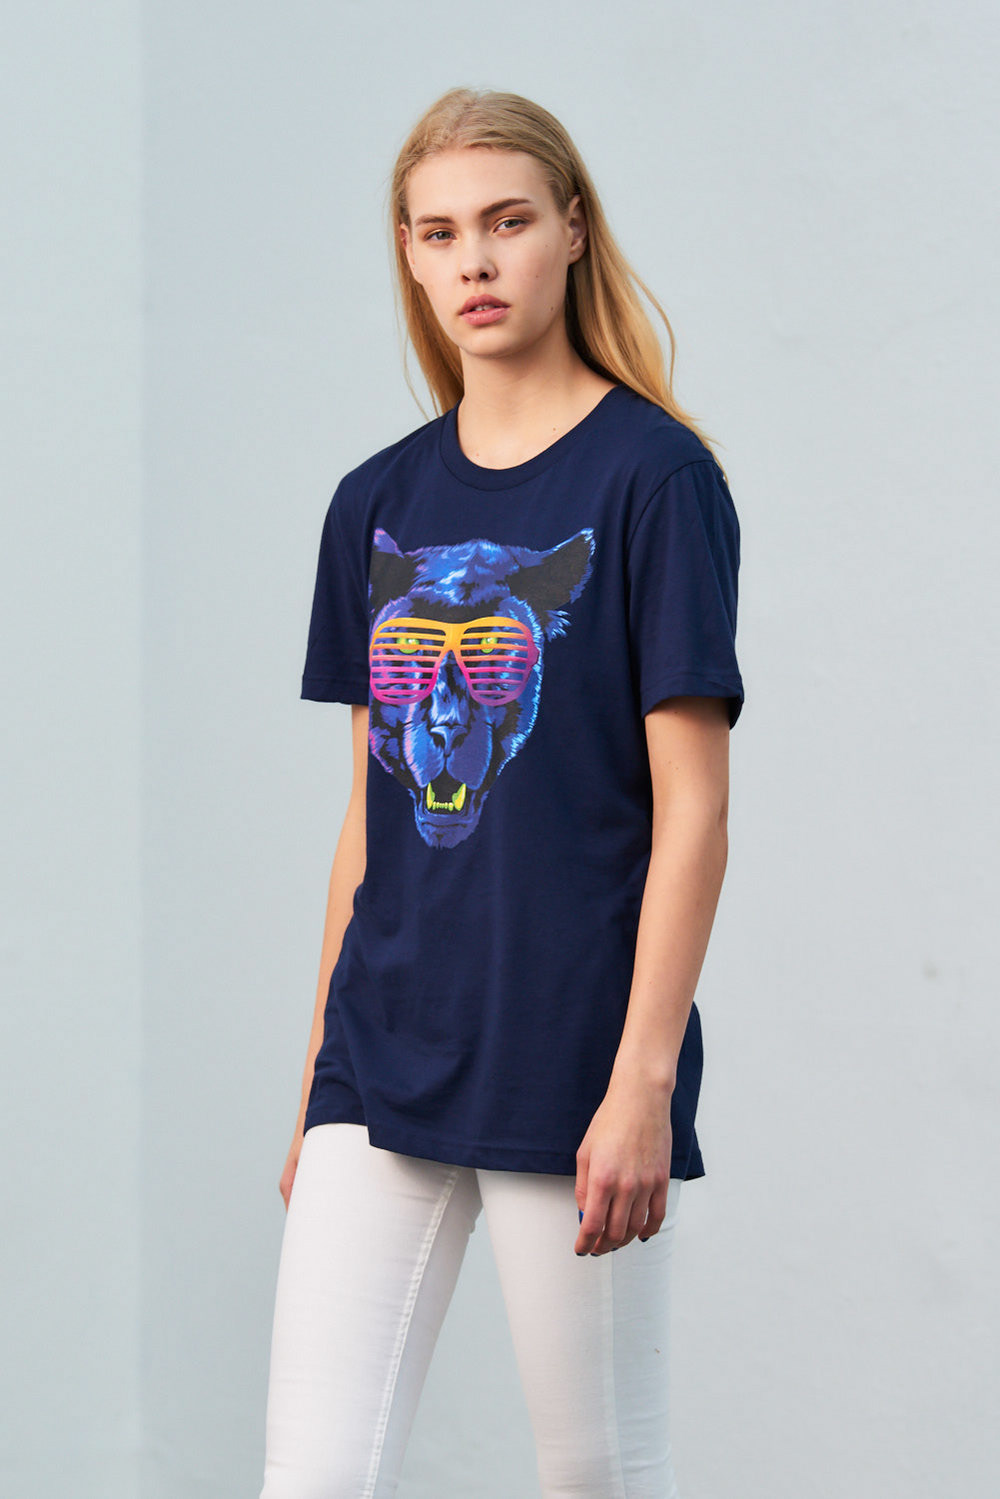 Signalnoise :: The Work of James White - 'Akade' t-shirt designs